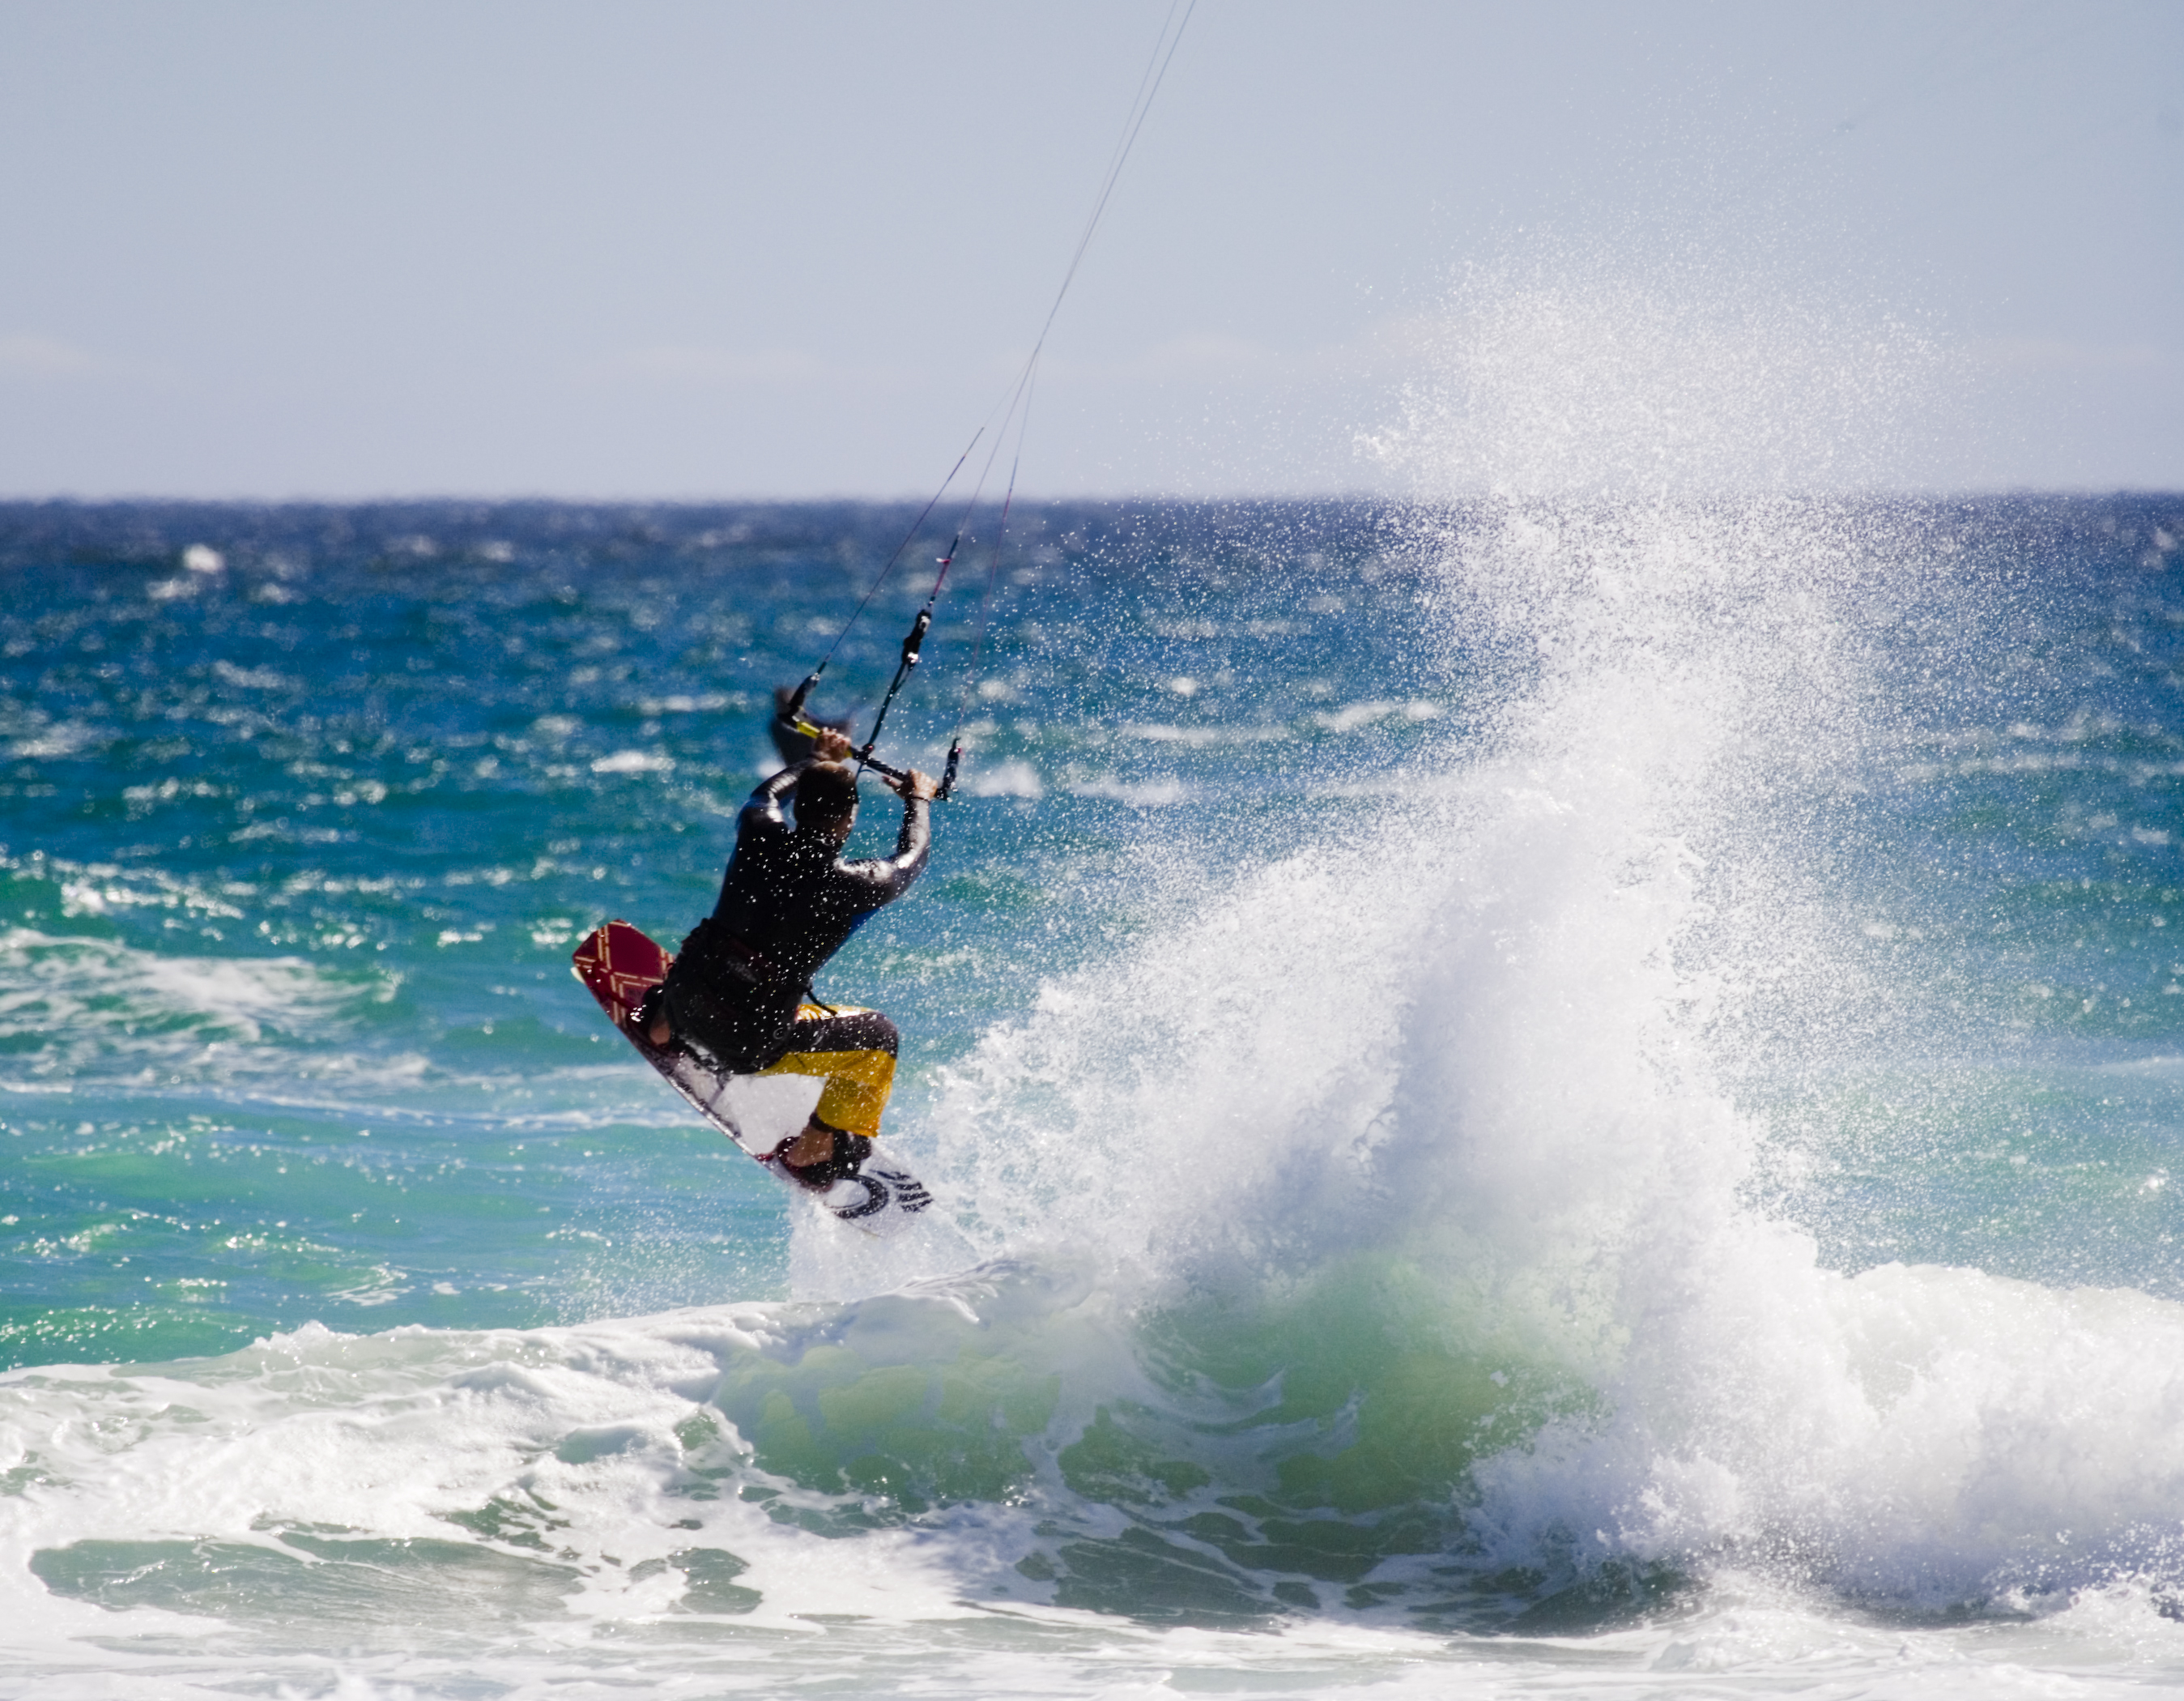 kite surfer taking off